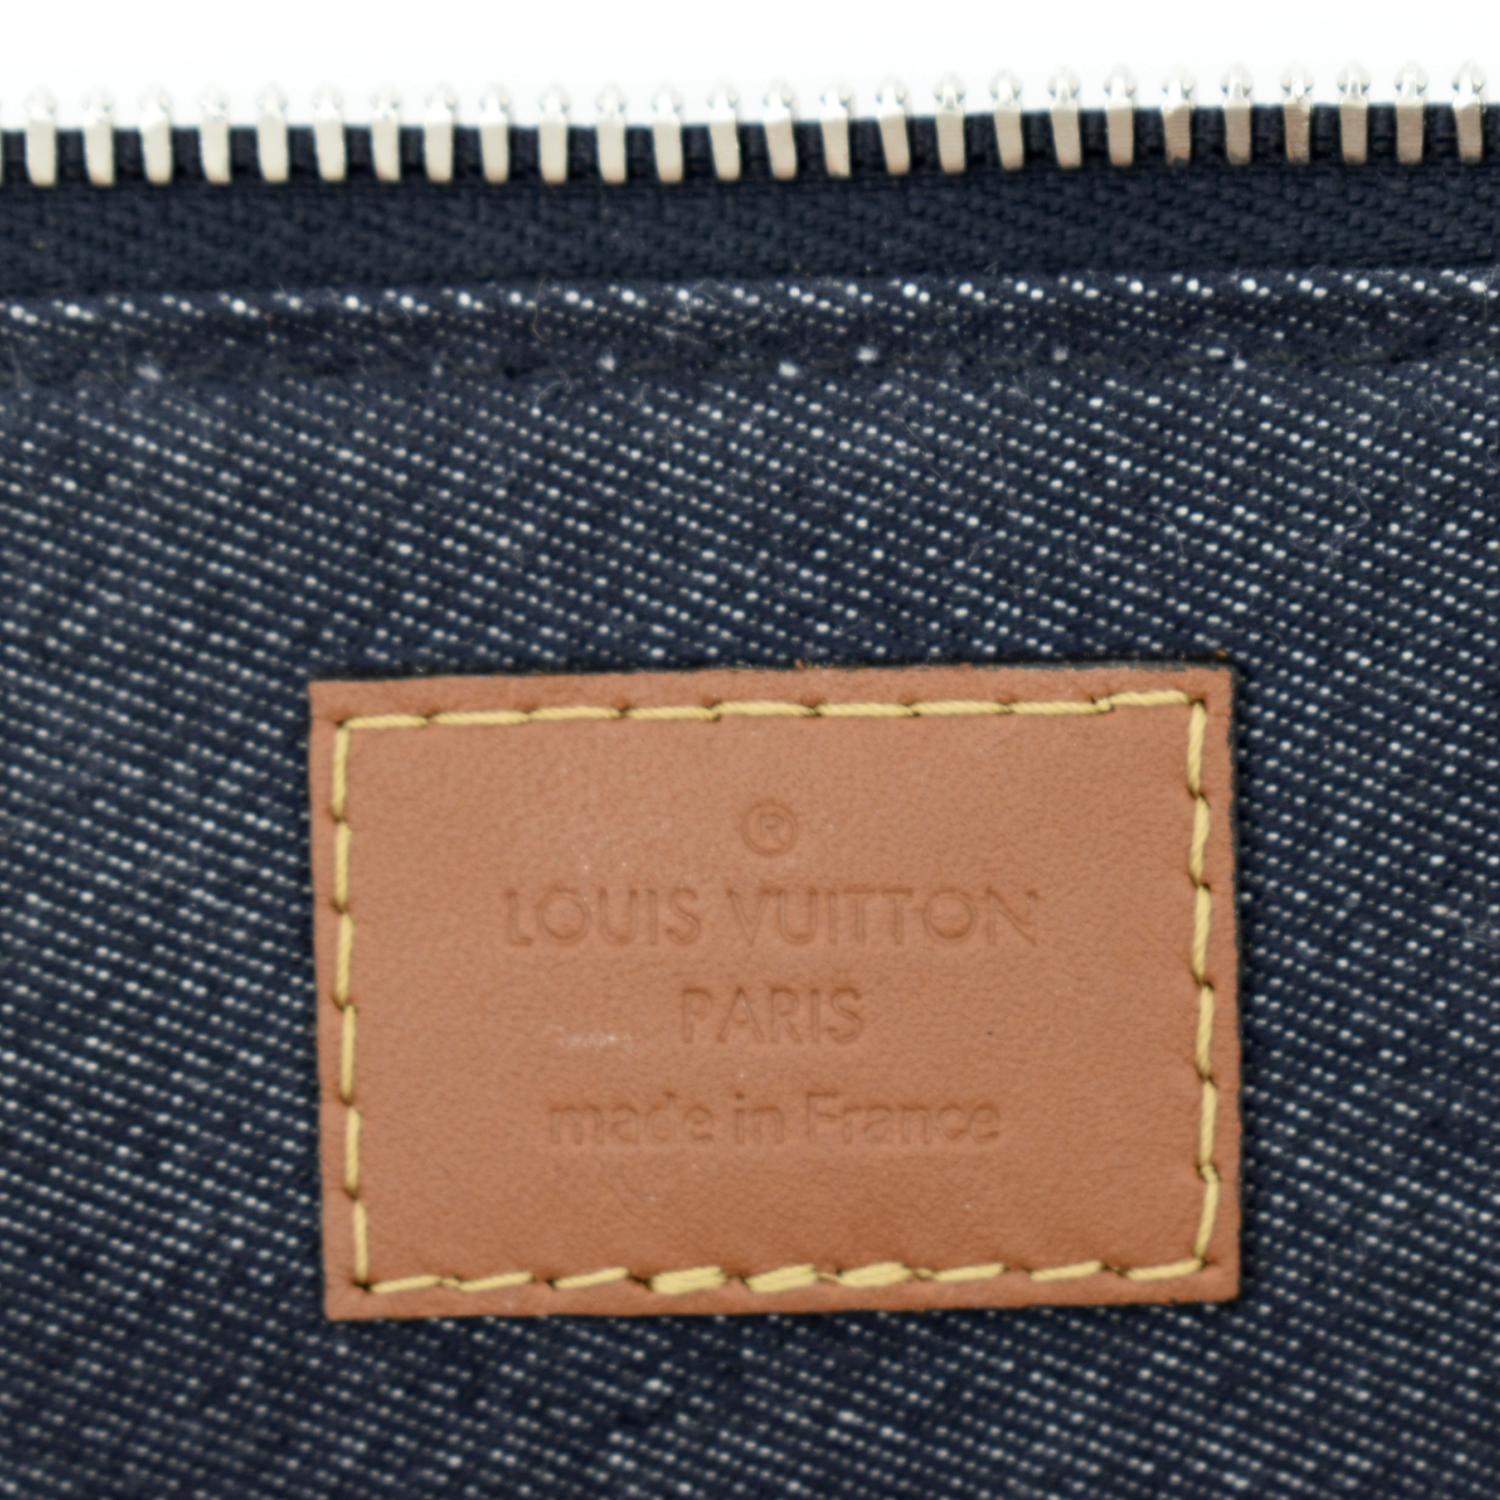 Louis Vuitton City Keepall Blue Nuage autres Cuirs